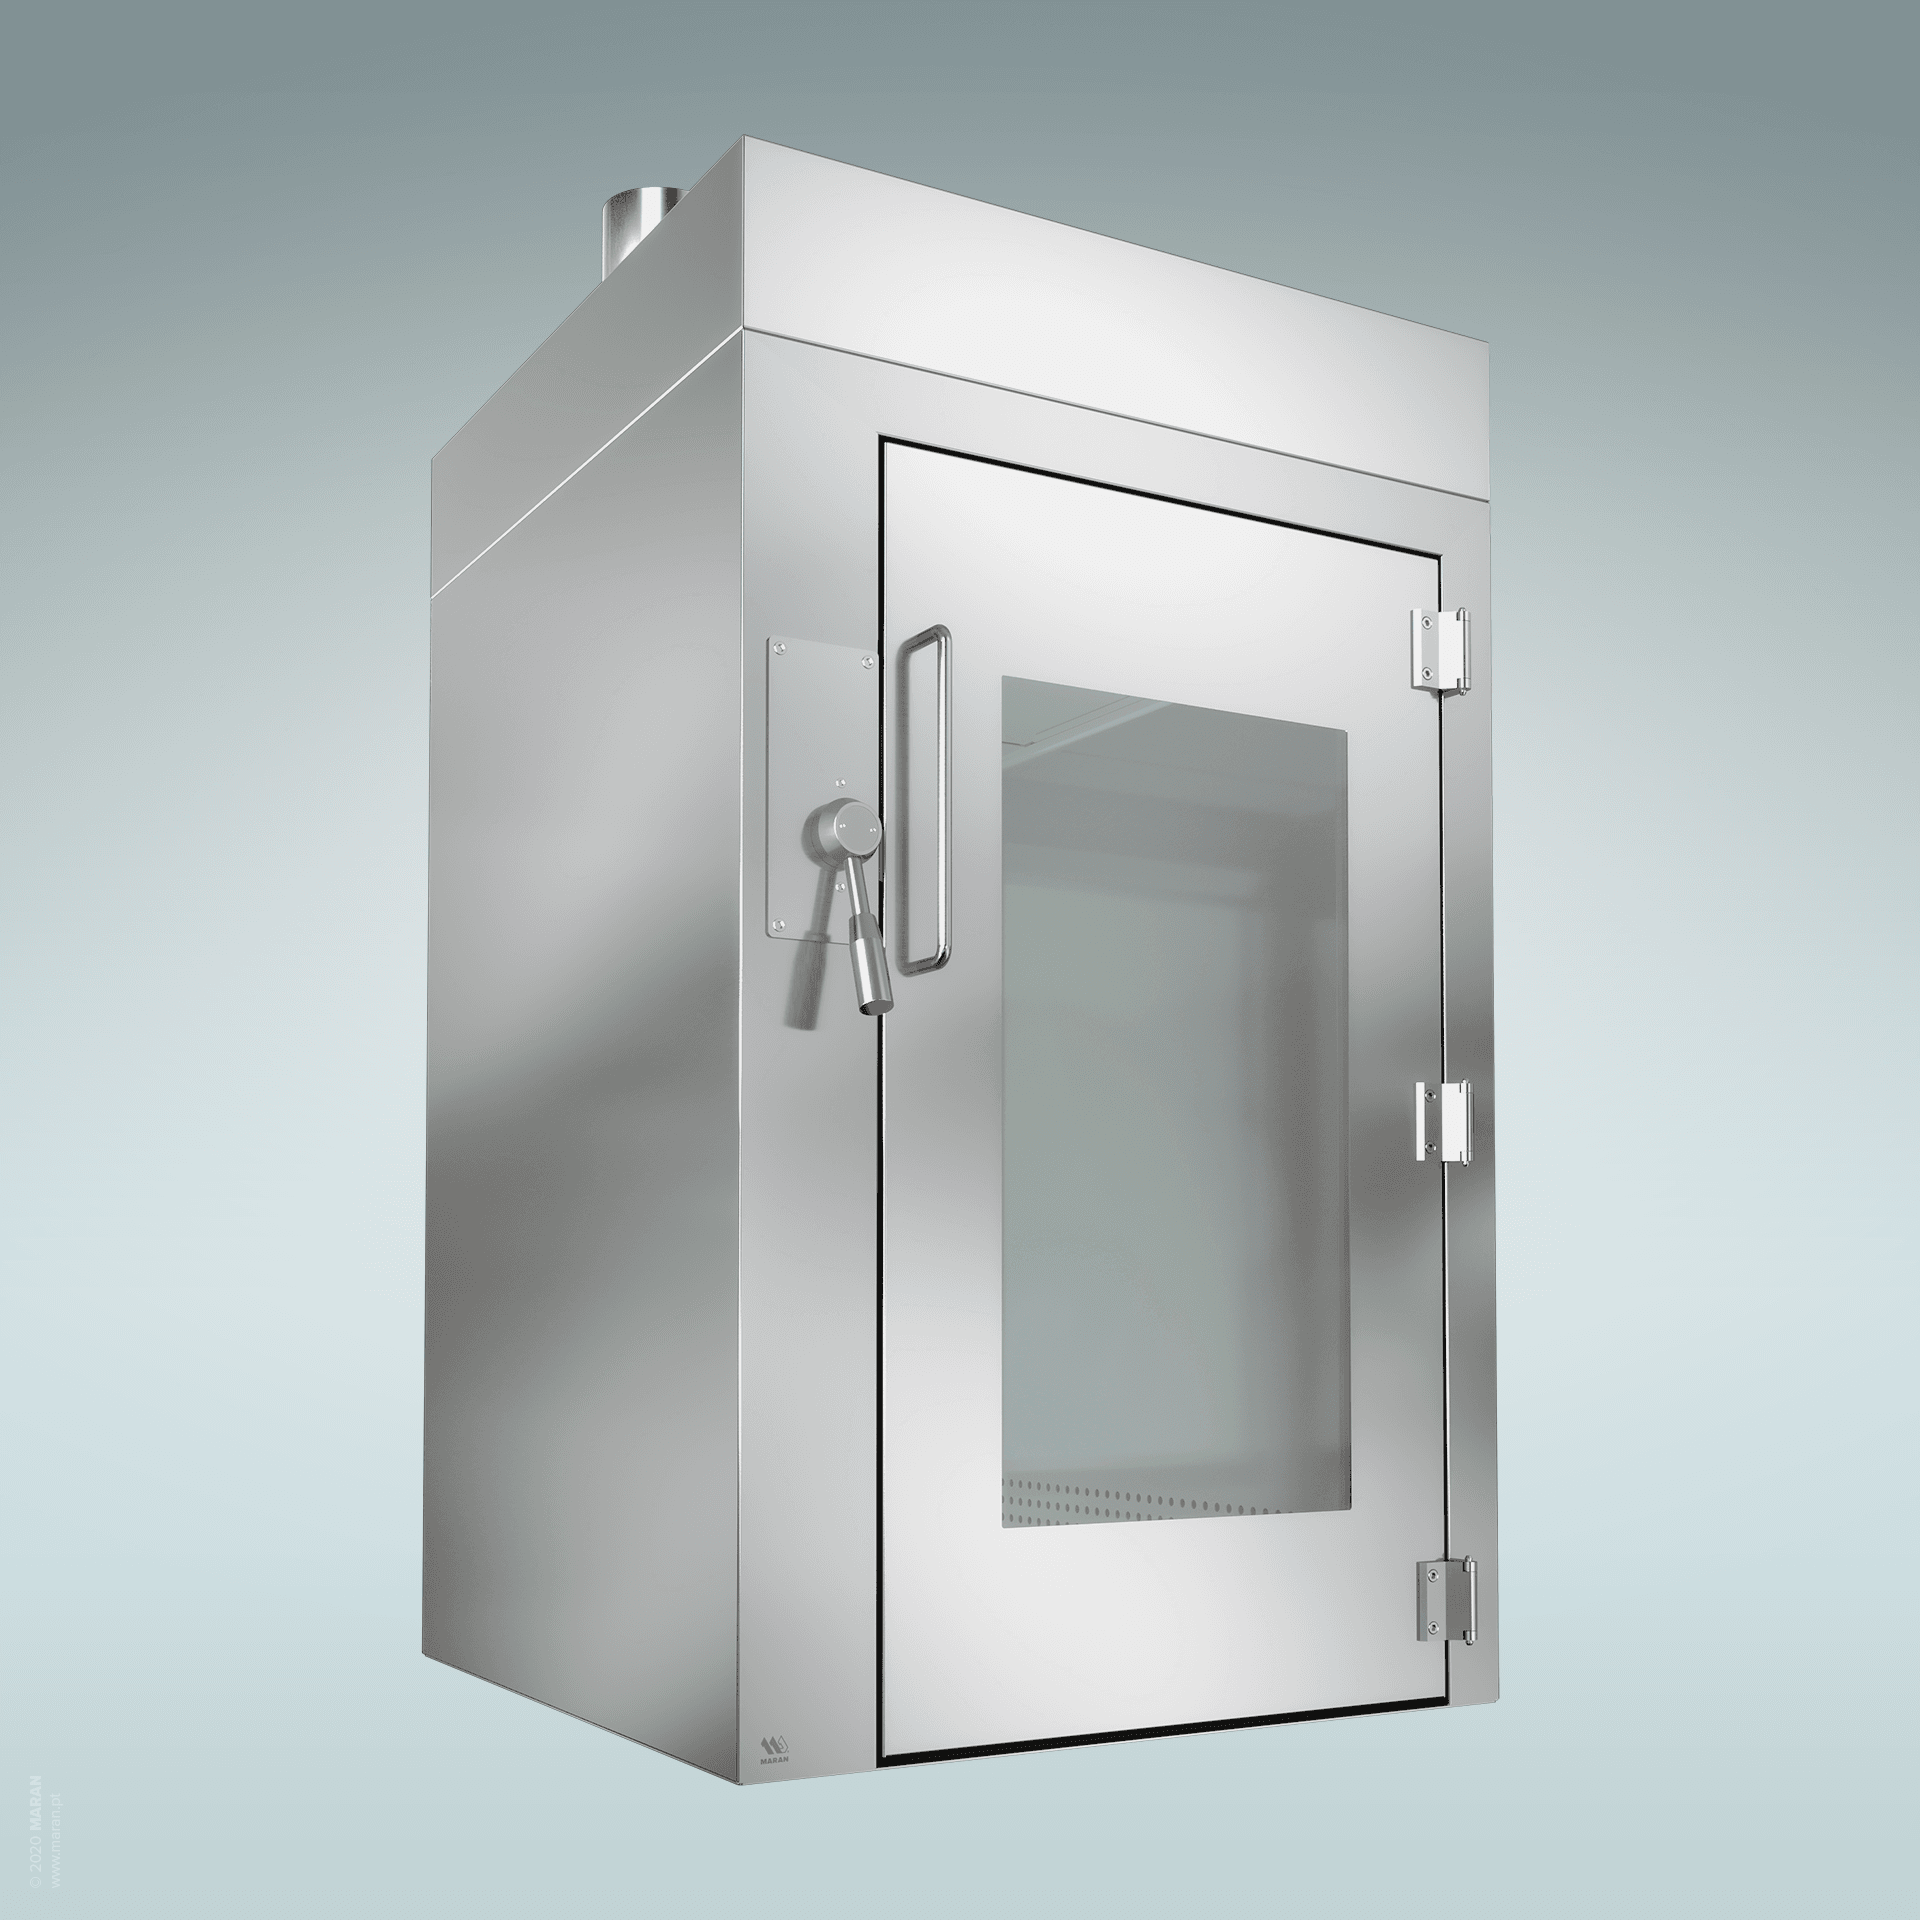 Bottomless Mechanical Passbox With Ventilation